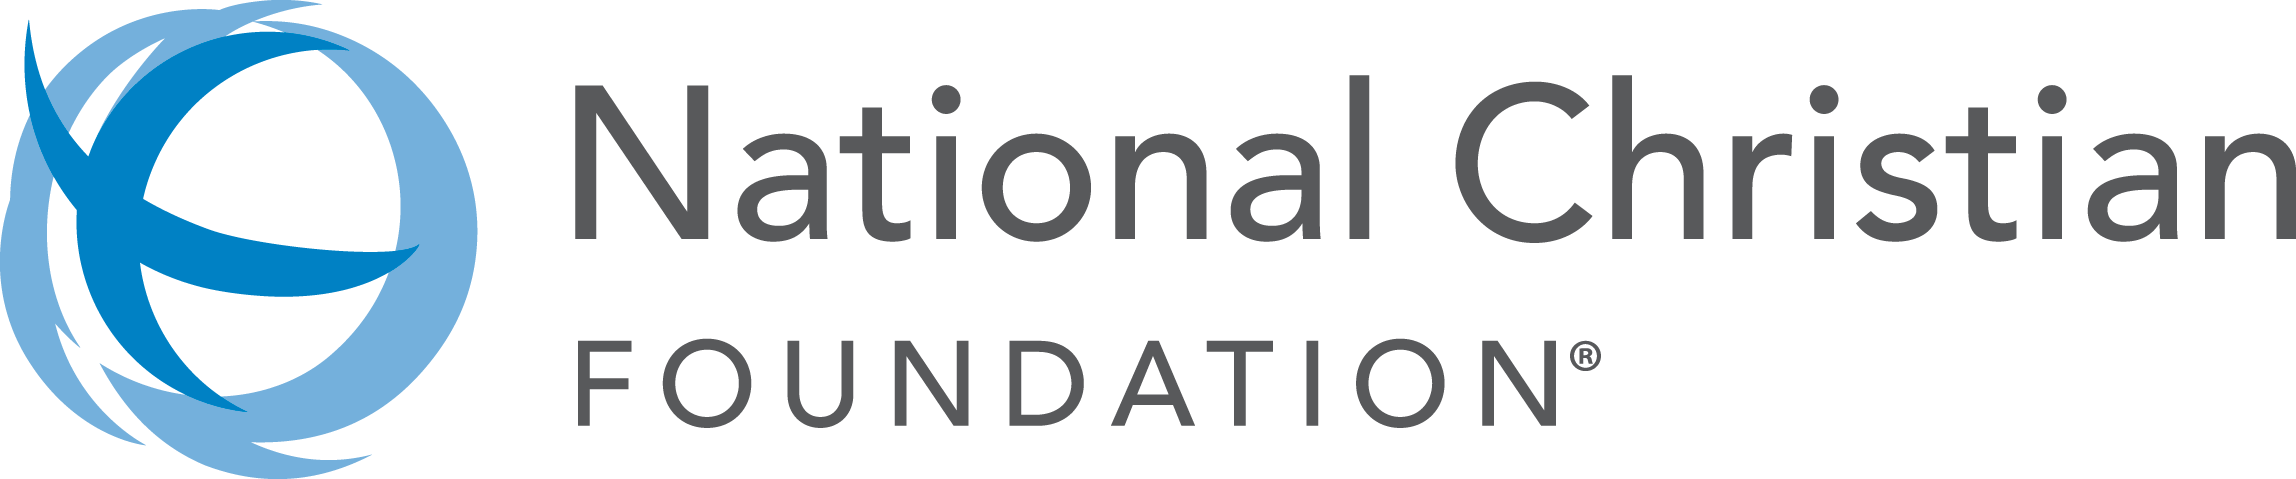 National_Christian_Foundation_logo